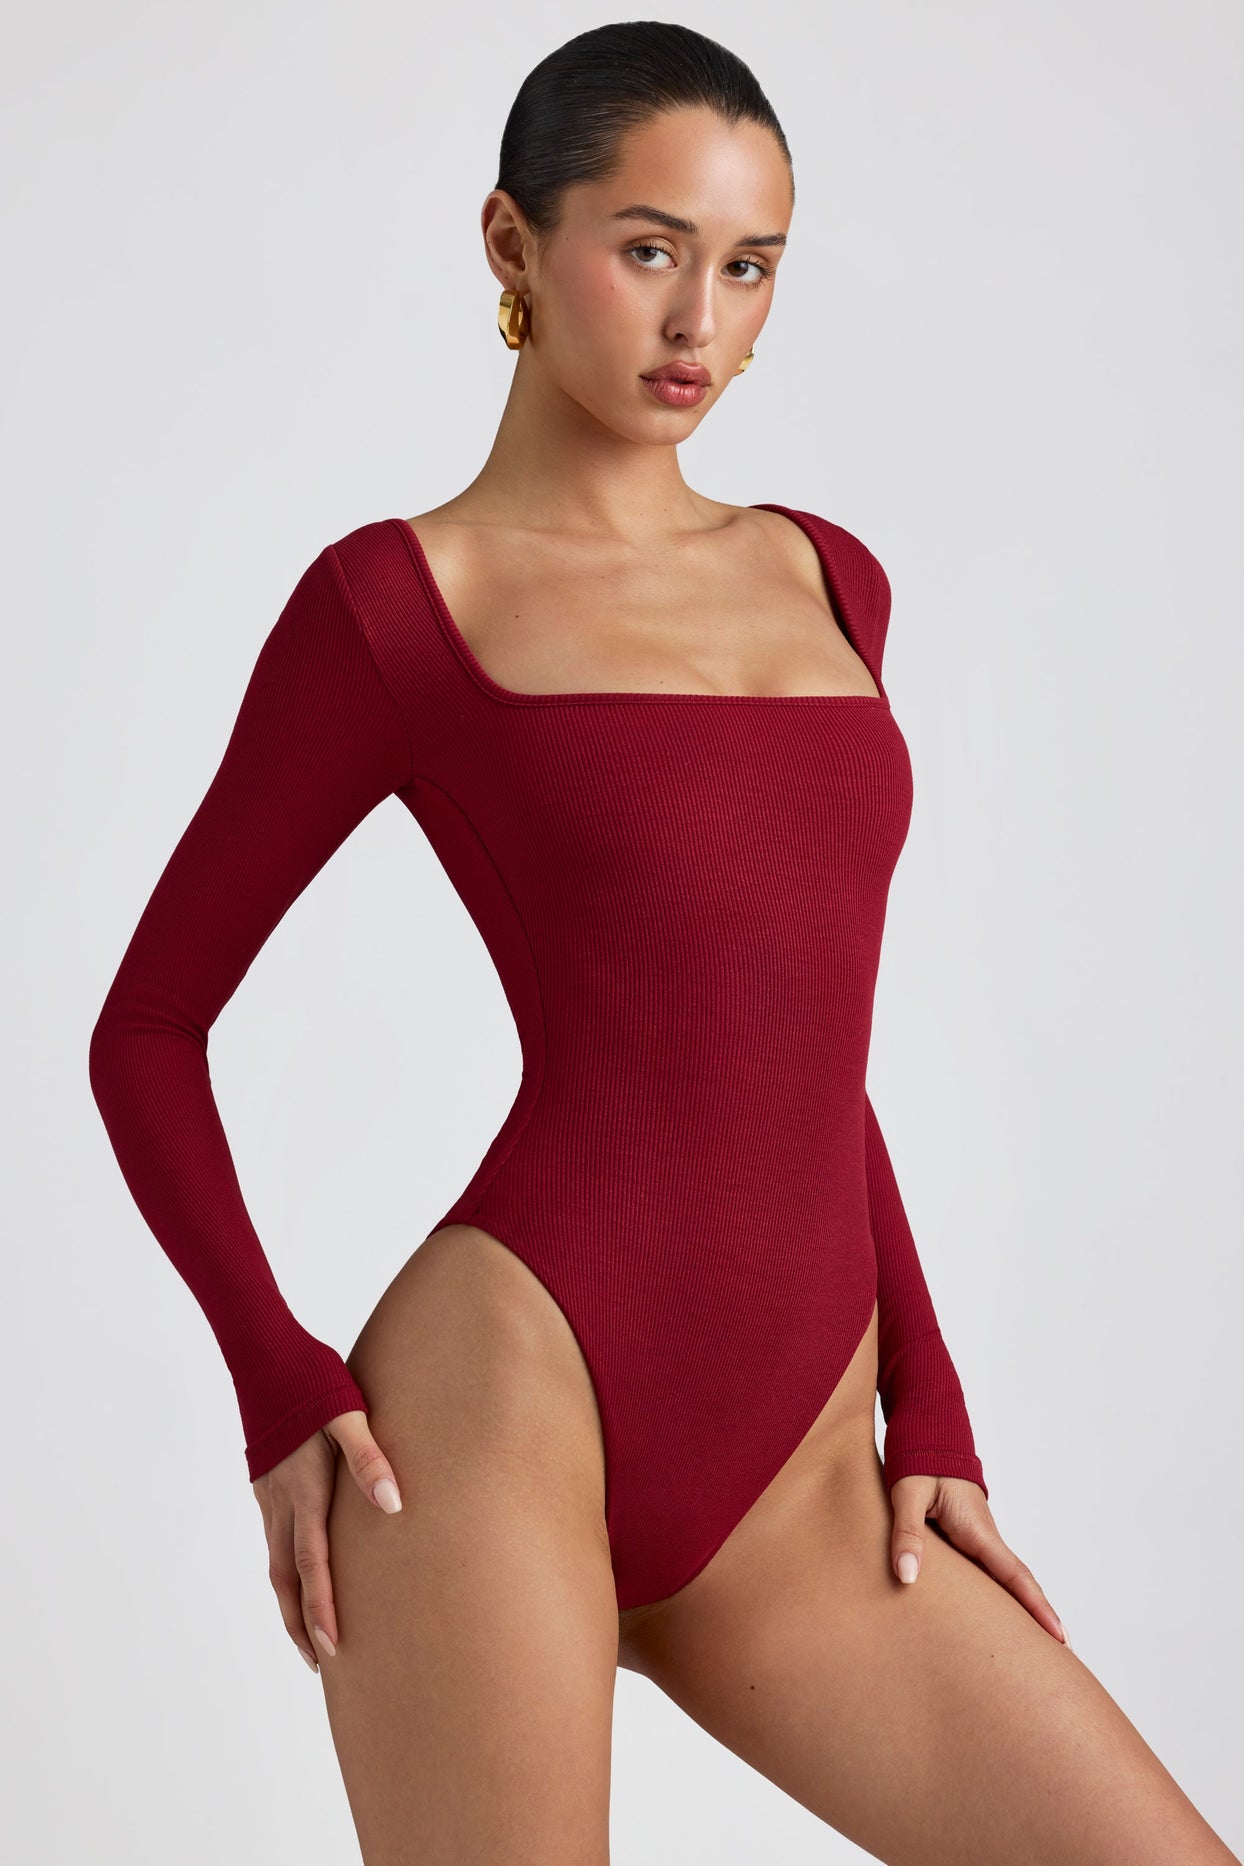 JML Belvia bodysuit slimming inner size L, Women's Fashion, New  Undergarments & Loungewear on Carousell